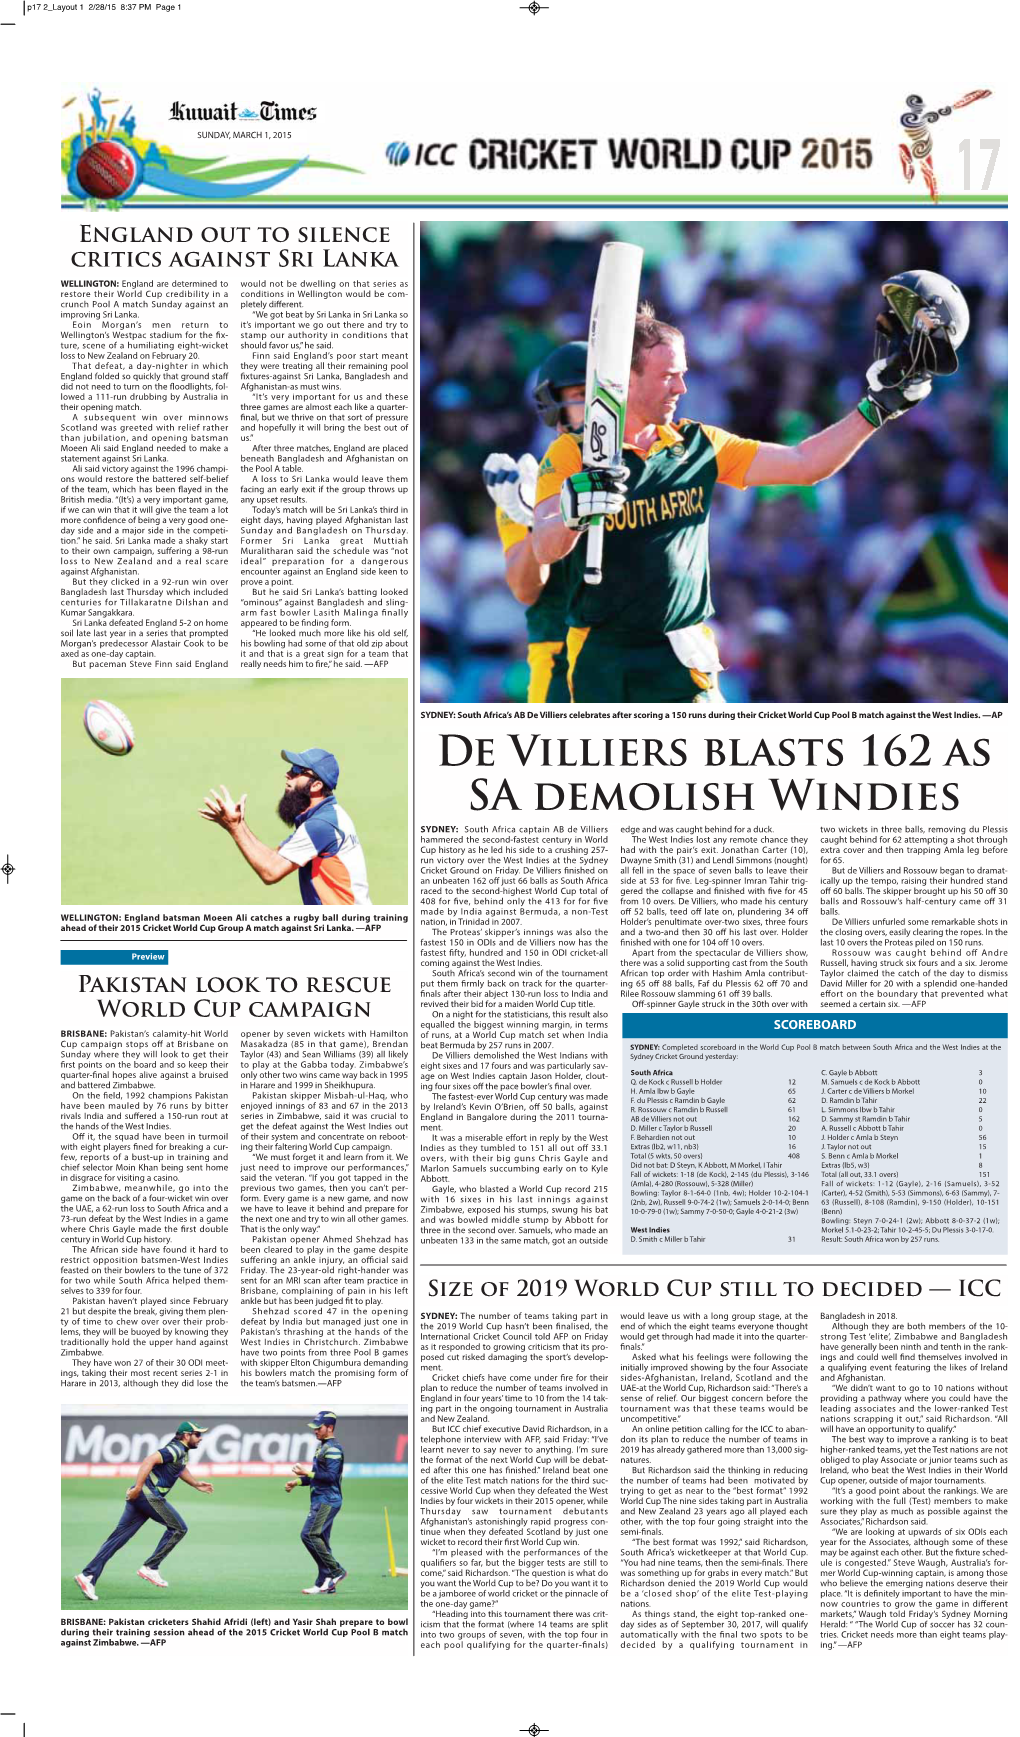 De Villiers Blasts 162 As SA Demolish Windies